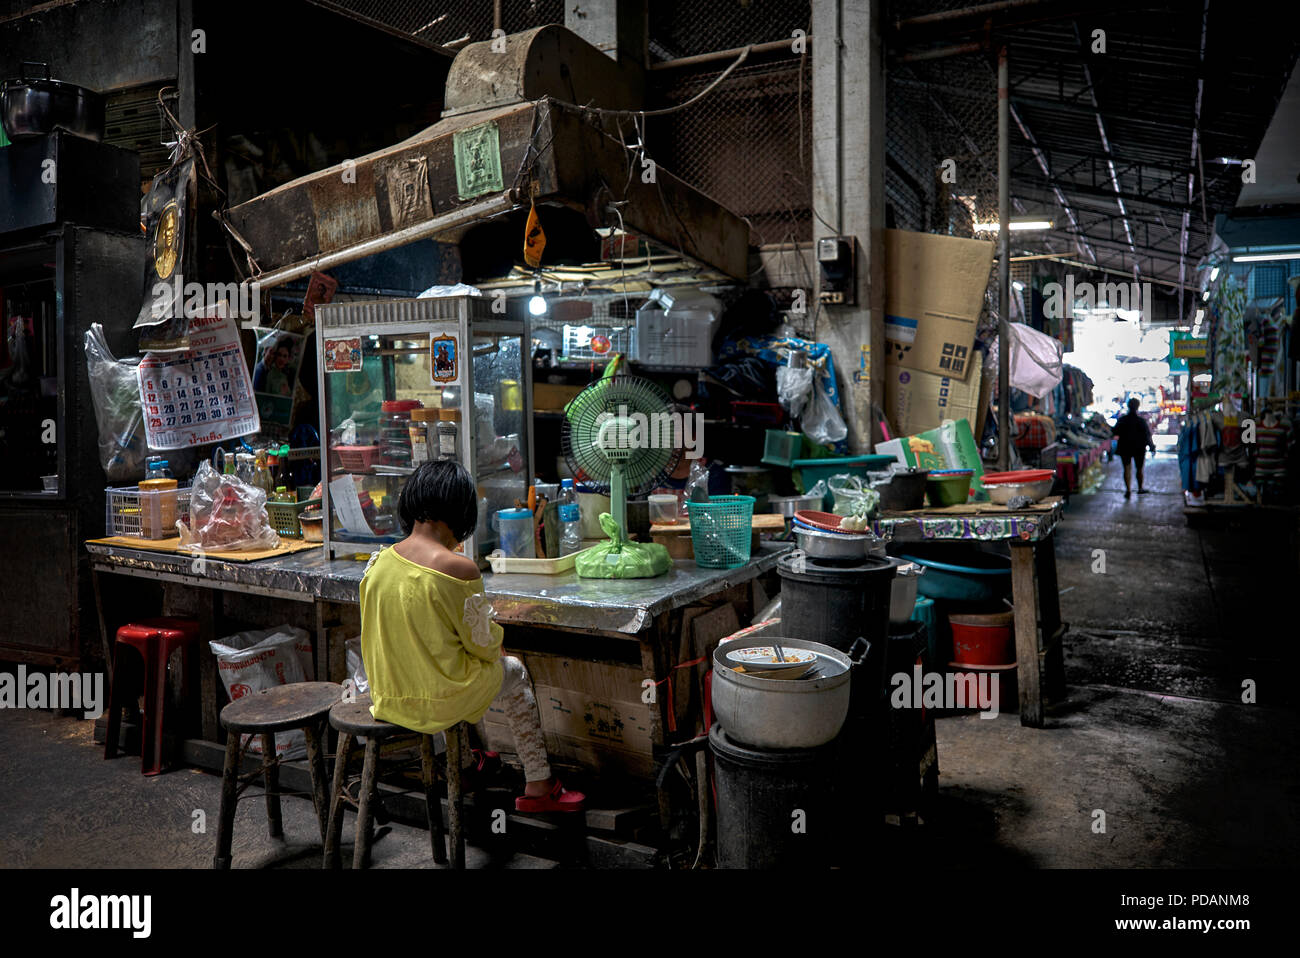 Child alone at a dimly lit Thailand market back street stall. Stock Photo